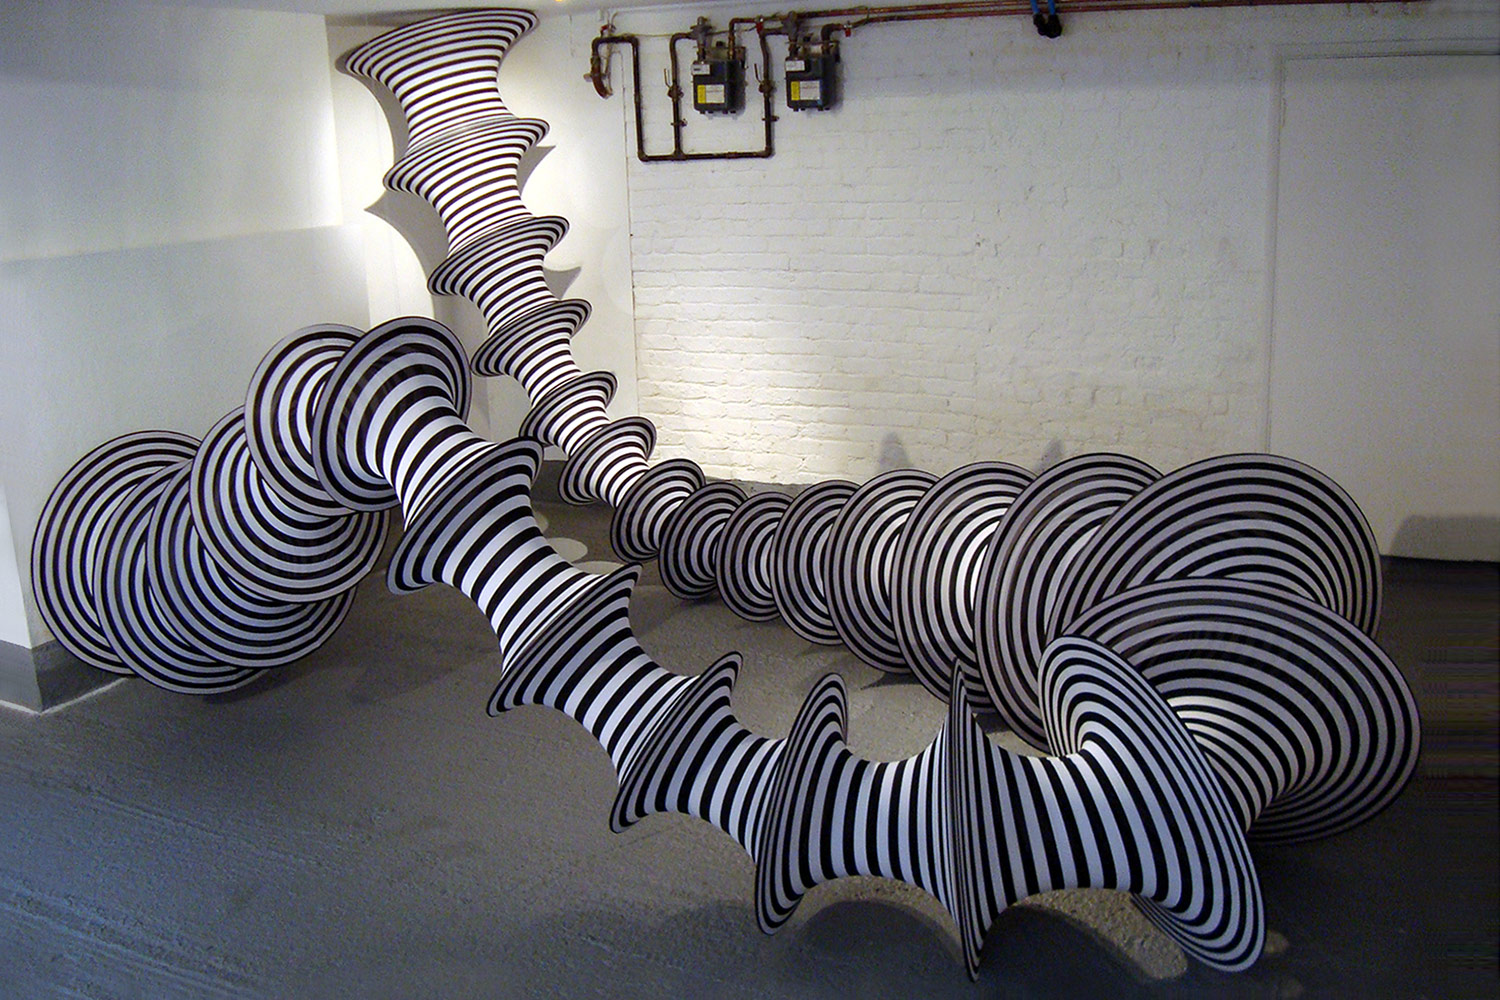 Fabric Sculpture (Untitled)